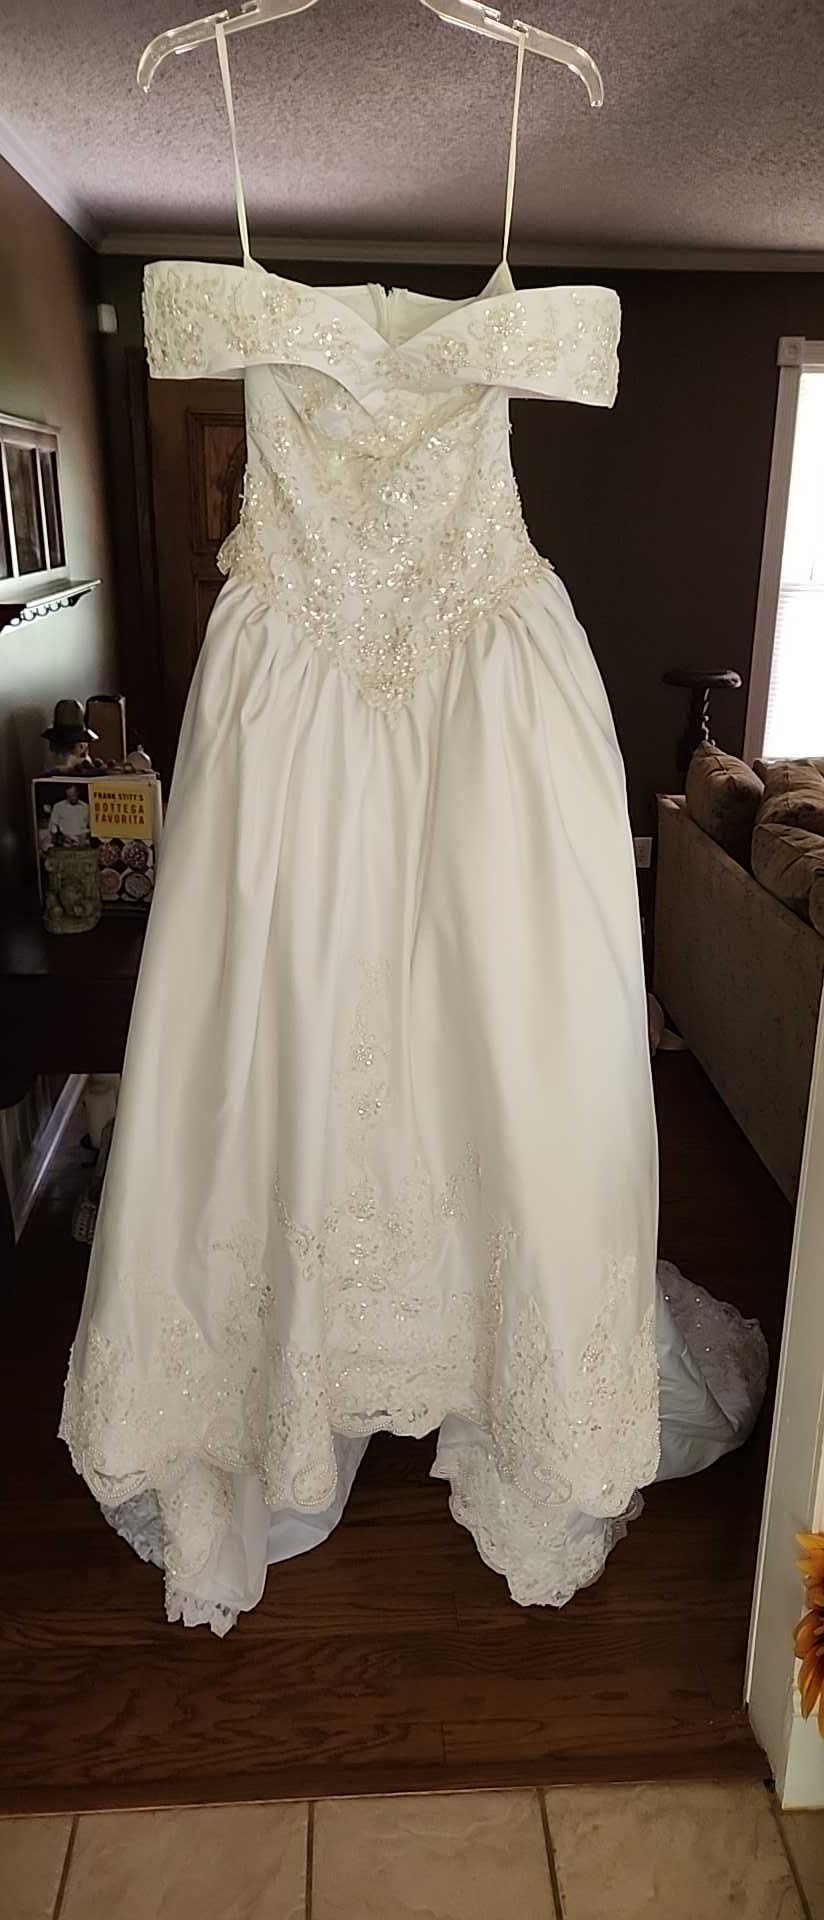 David's Bridal Size 8 Wedding Dress